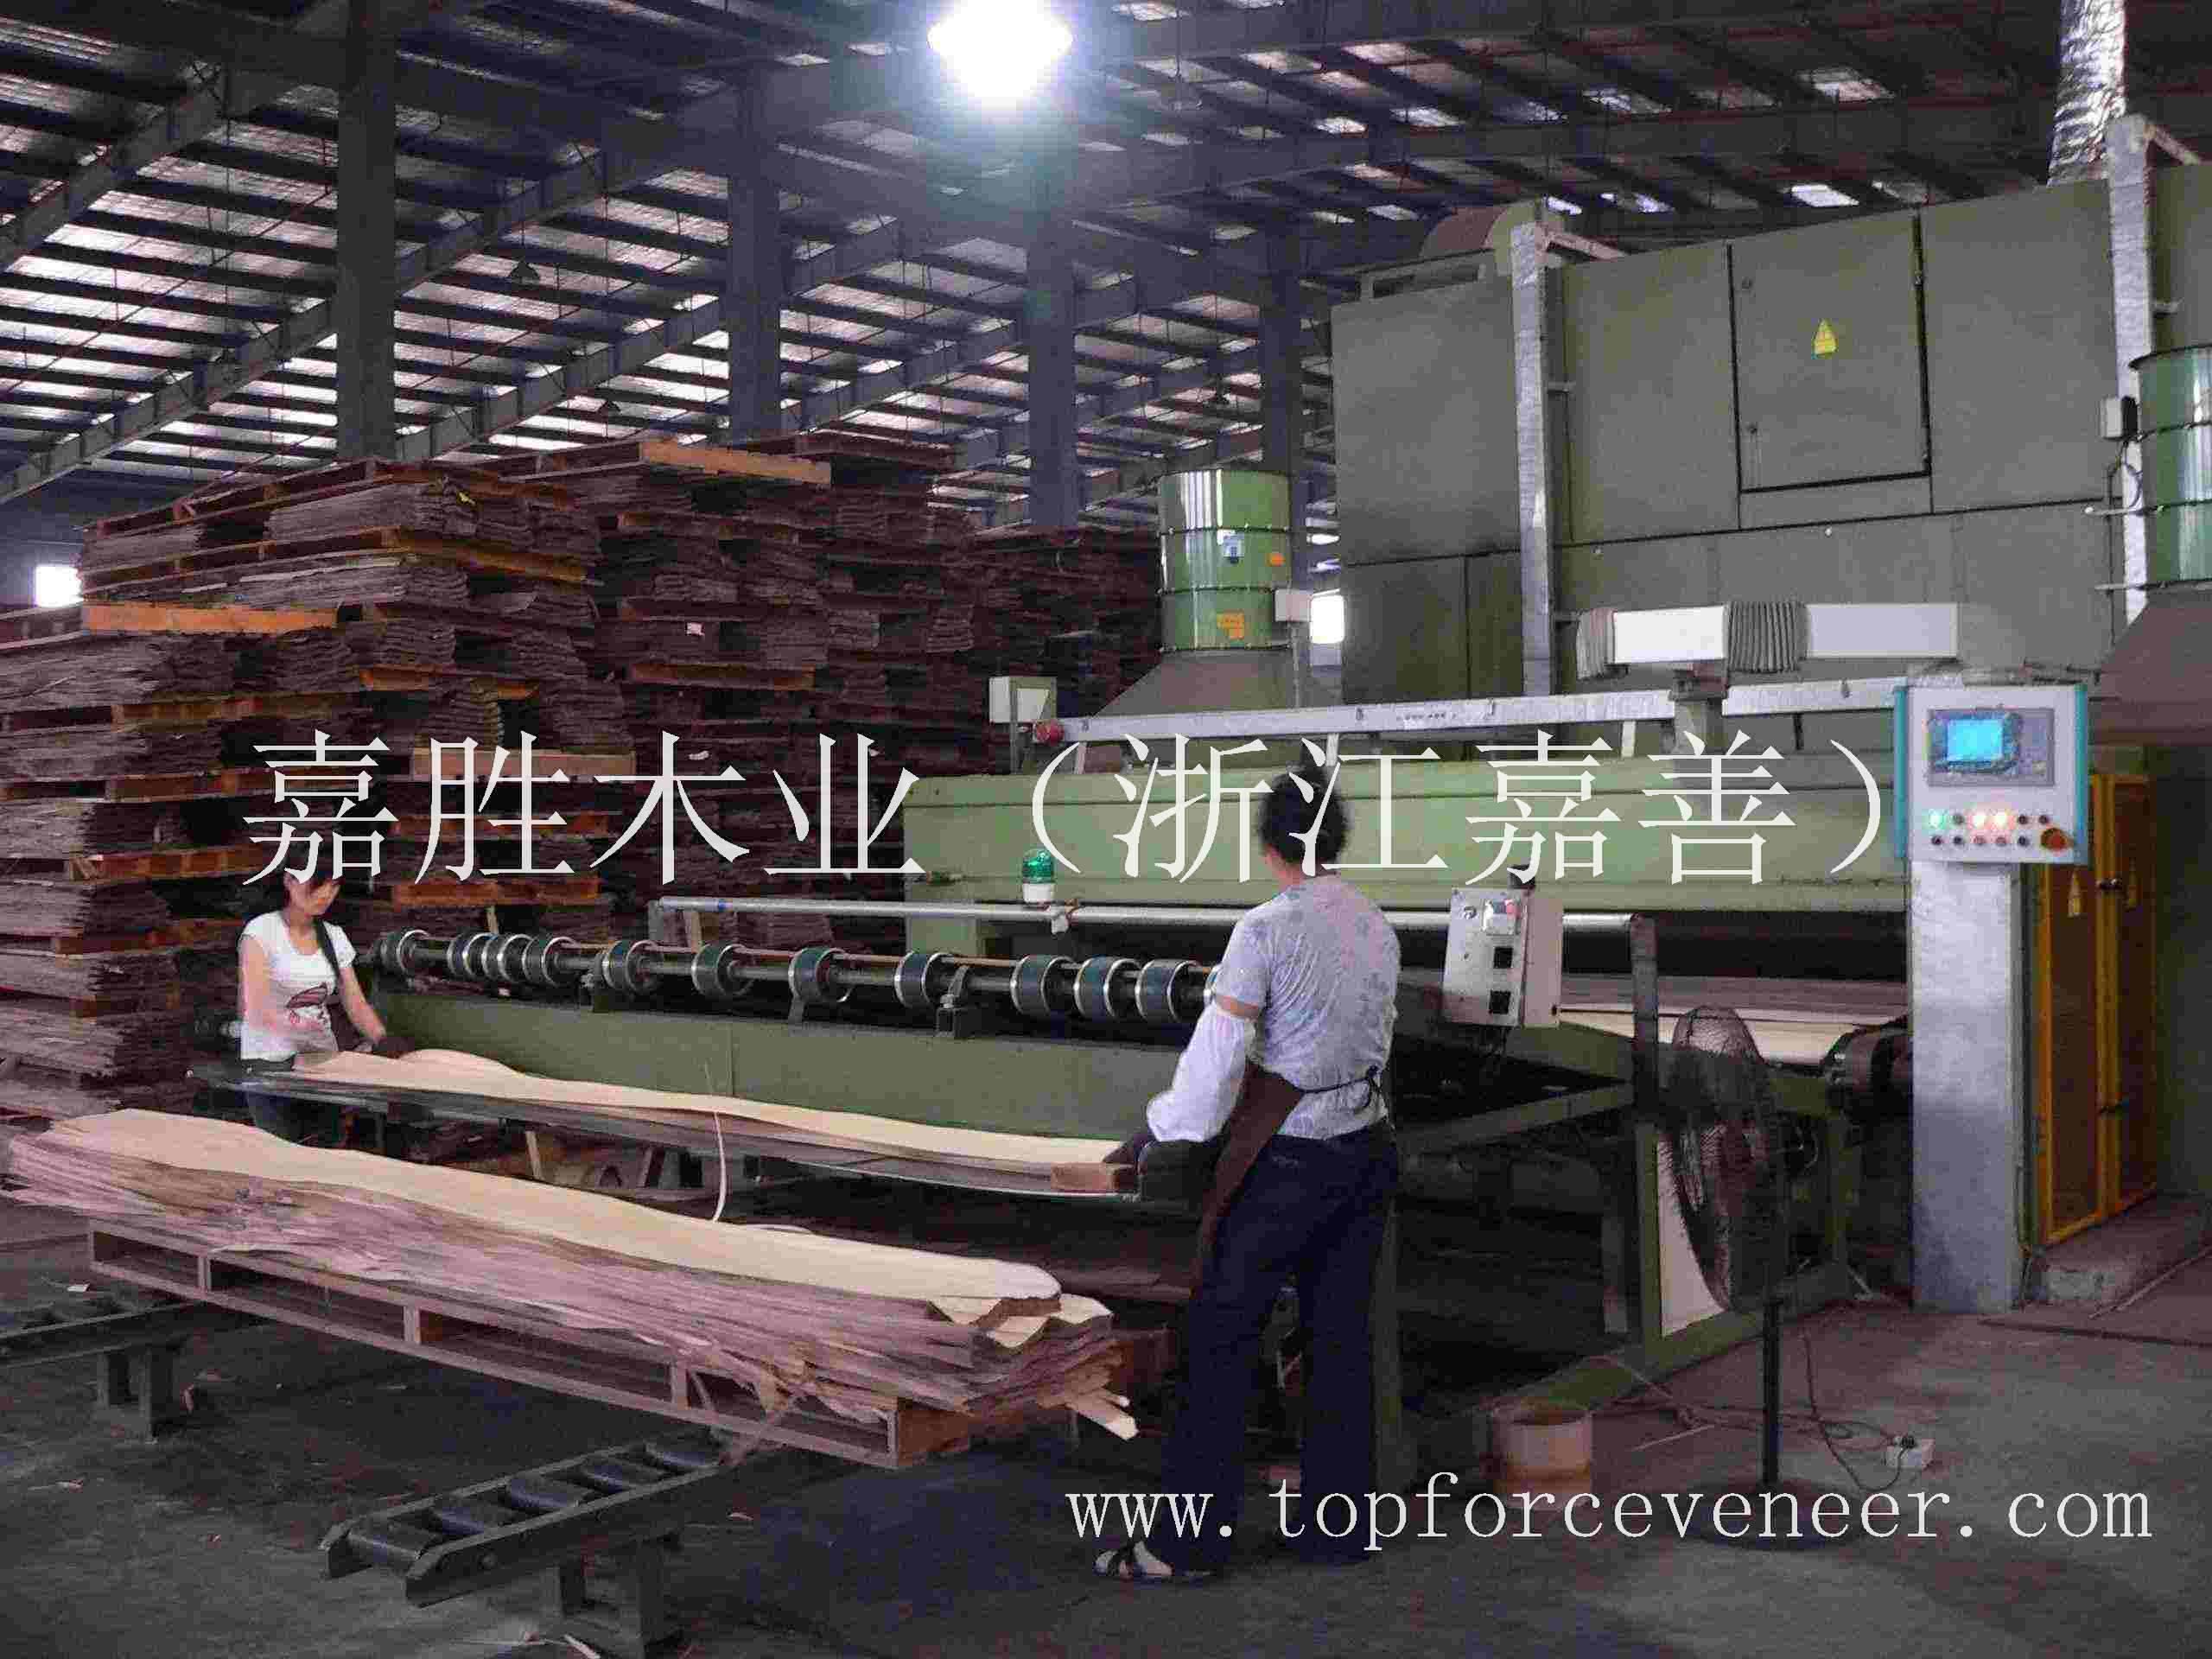 嘉善原木木皮加工厂 JiaShan Logs Veneer Production Factory